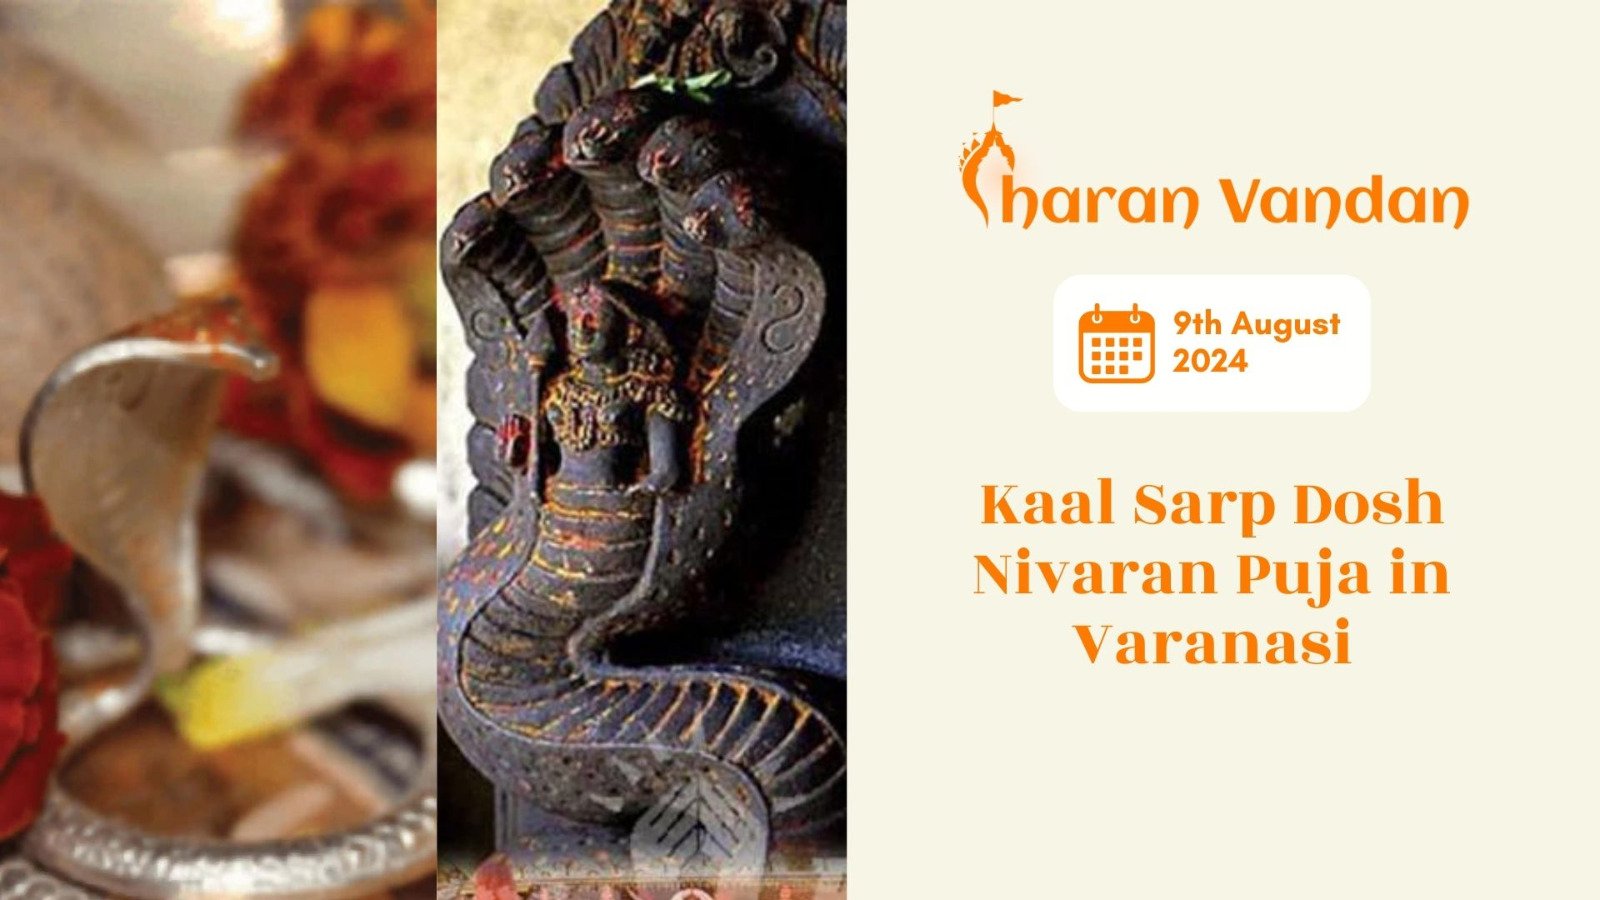 Experience the transformative Kaal Sarp Dosh Nivaran Puja in Varanasi on Nag Panchami..